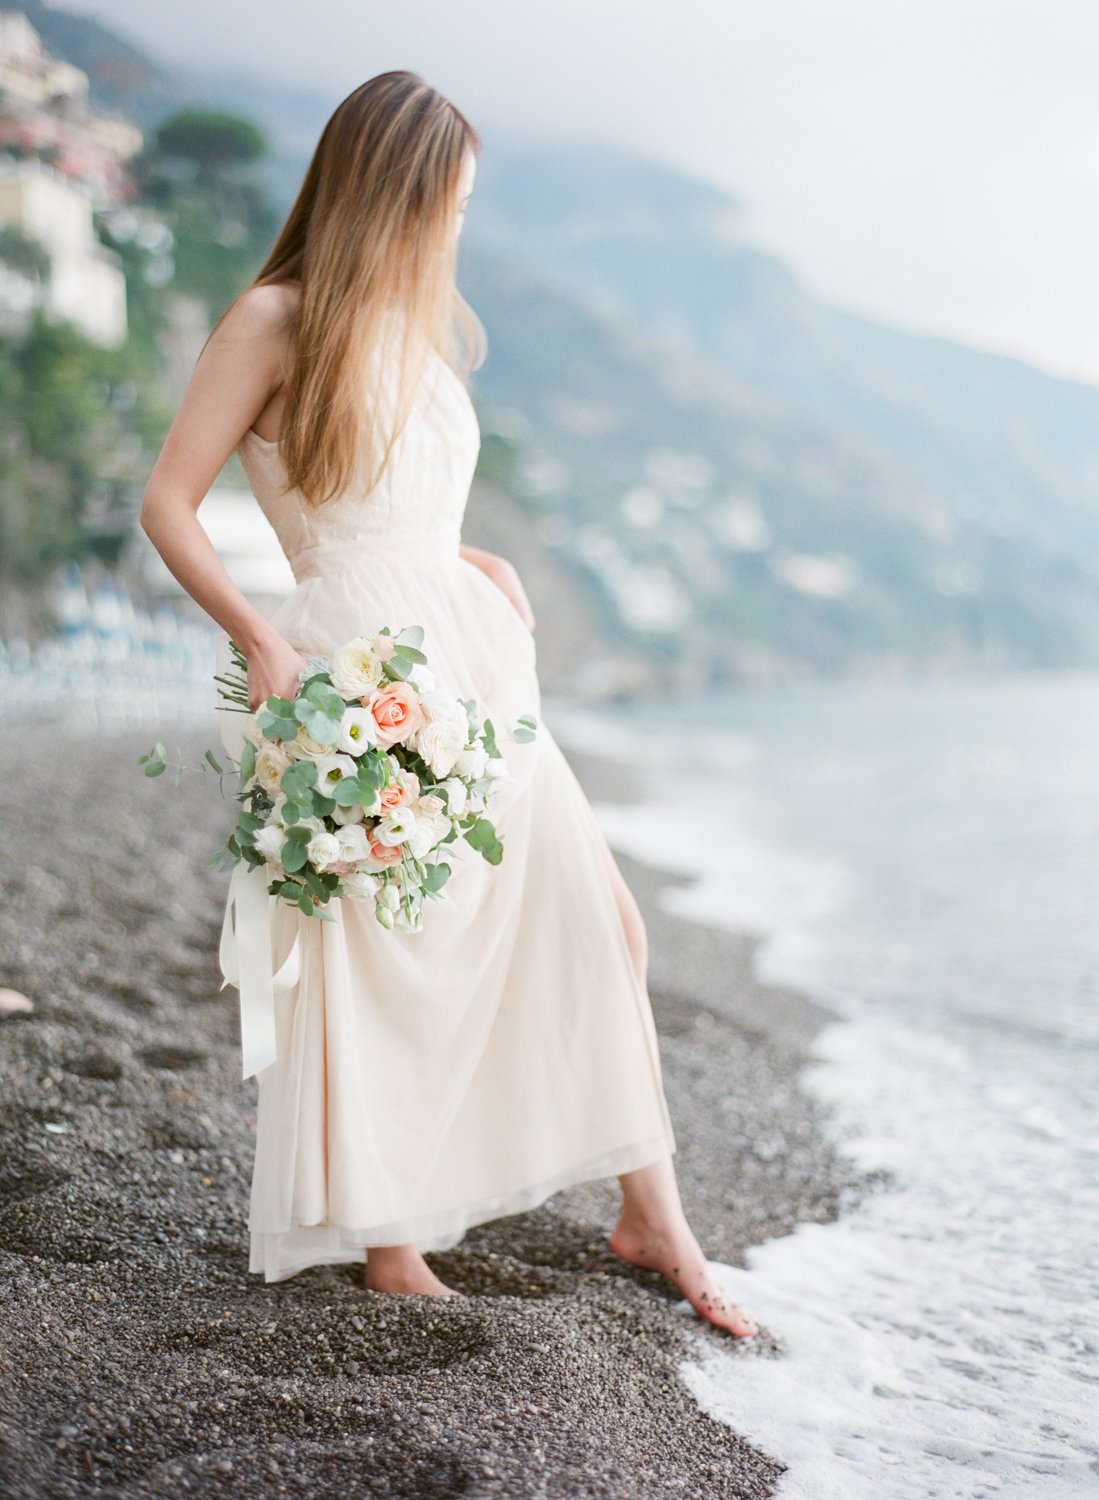 positano+wedding+anniversary+amalfi+coast+wedding+photographer+positano+film+wedding+photographer+59.jpeg